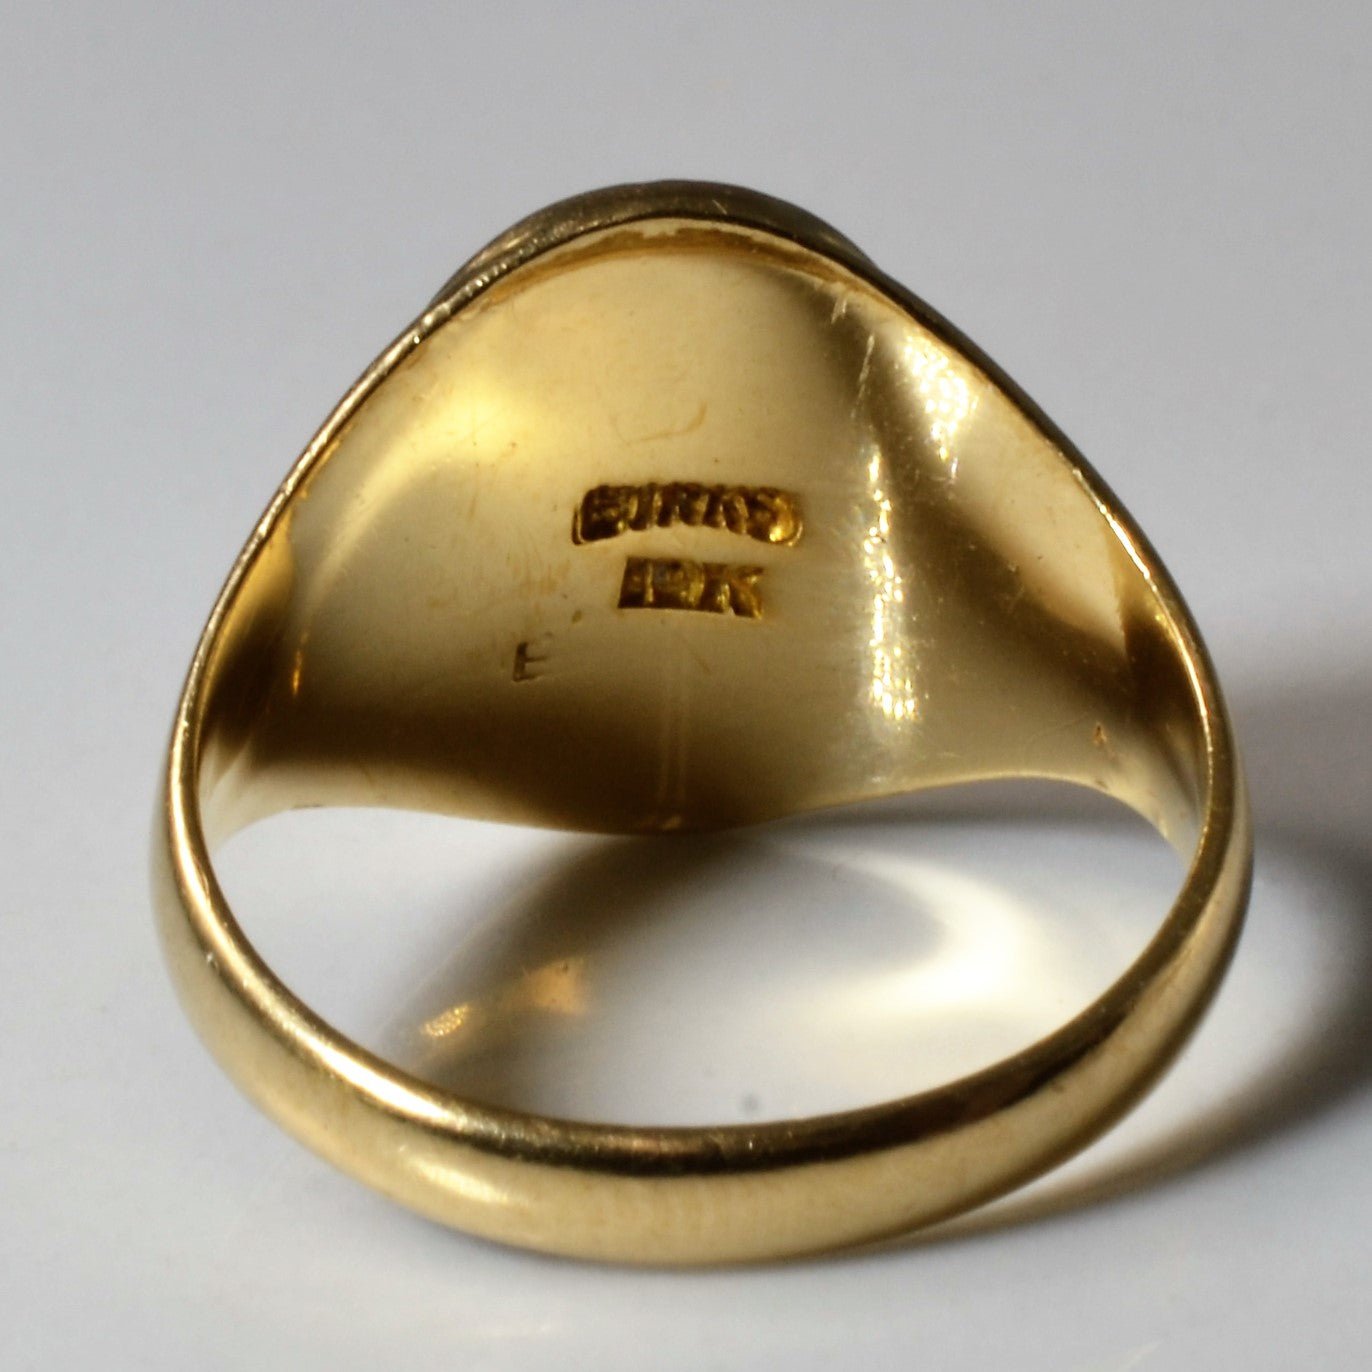 'Birks' Initial 'RAH' Signet Ring | SZ 2.75 | - 100 Ways